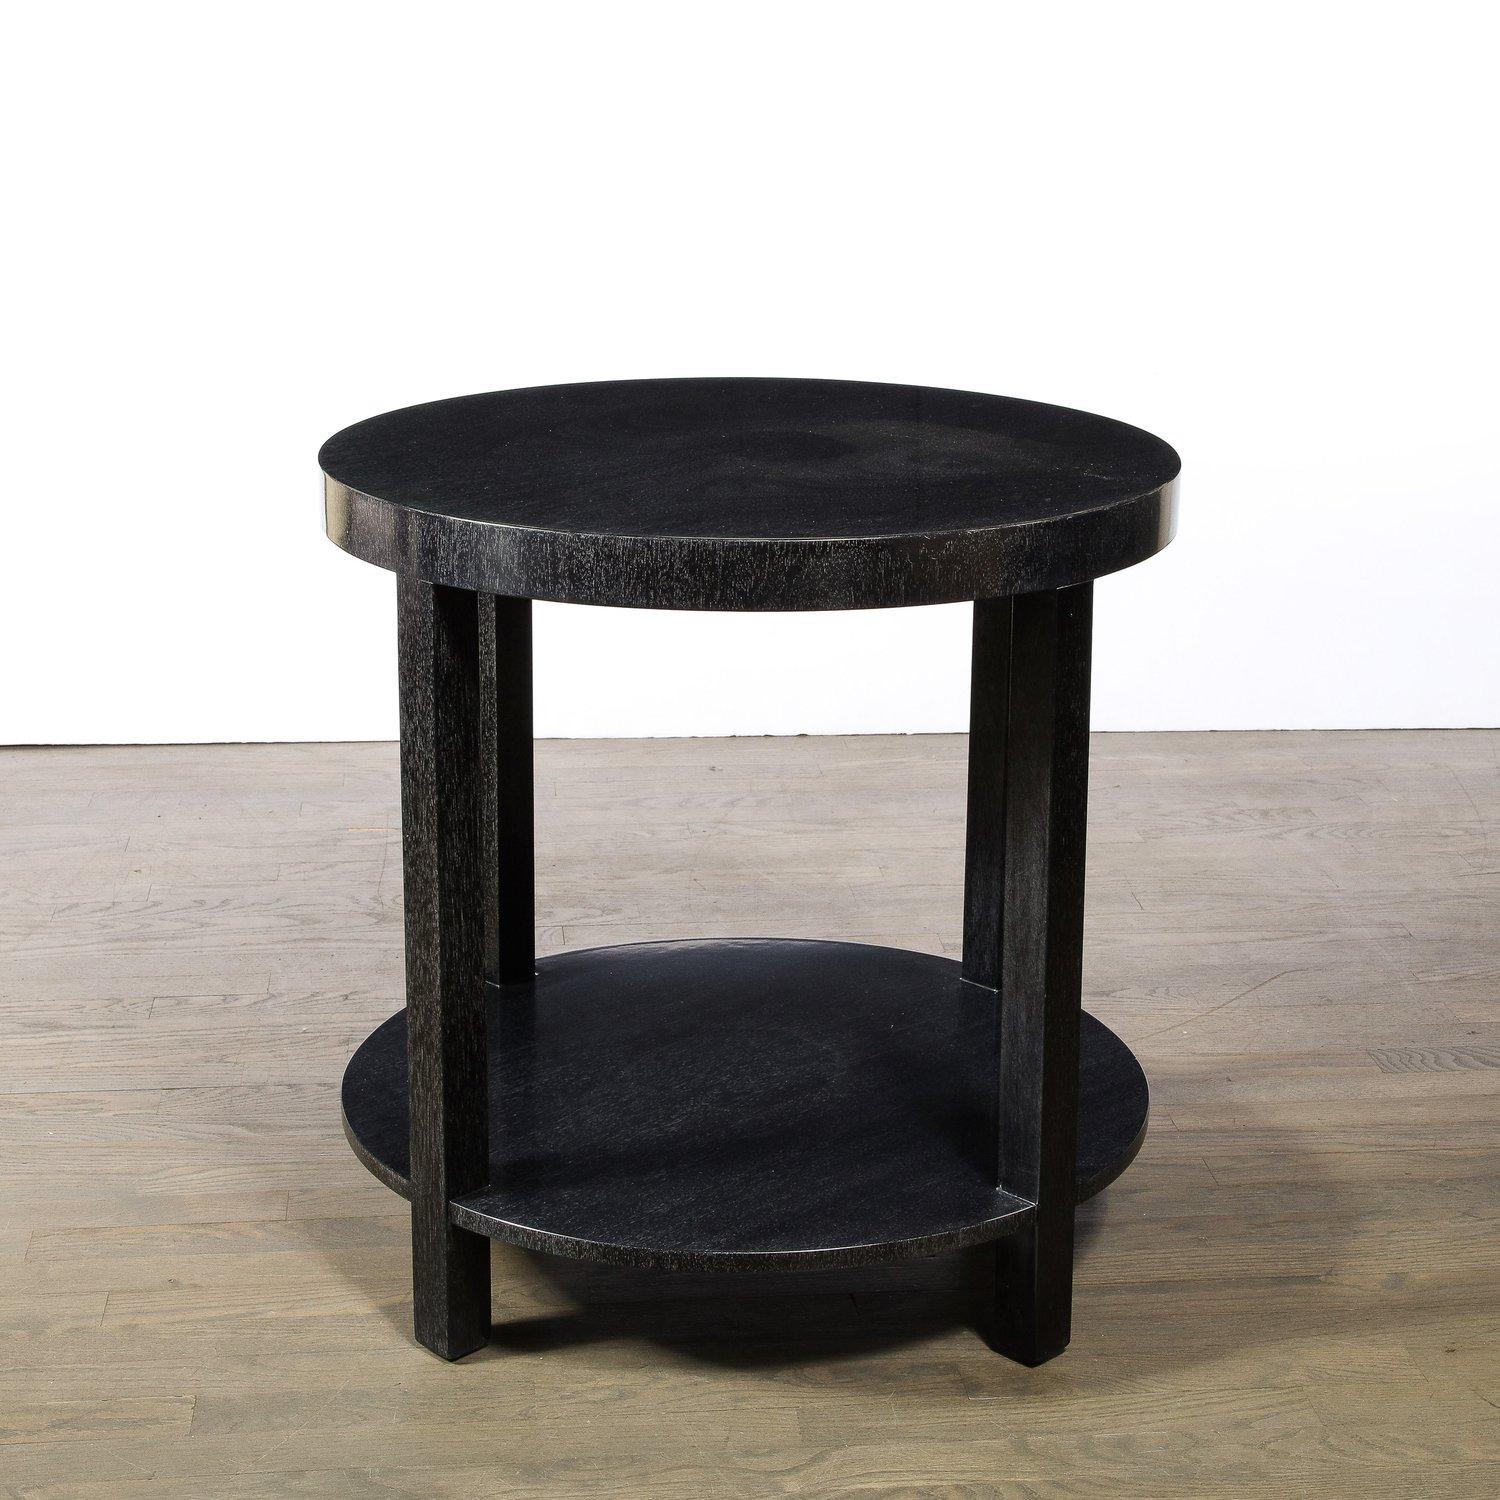 American Mid-Century Modern Cerused Walnut Side Table by T.H. Robsjohn-Gibbings For Sale